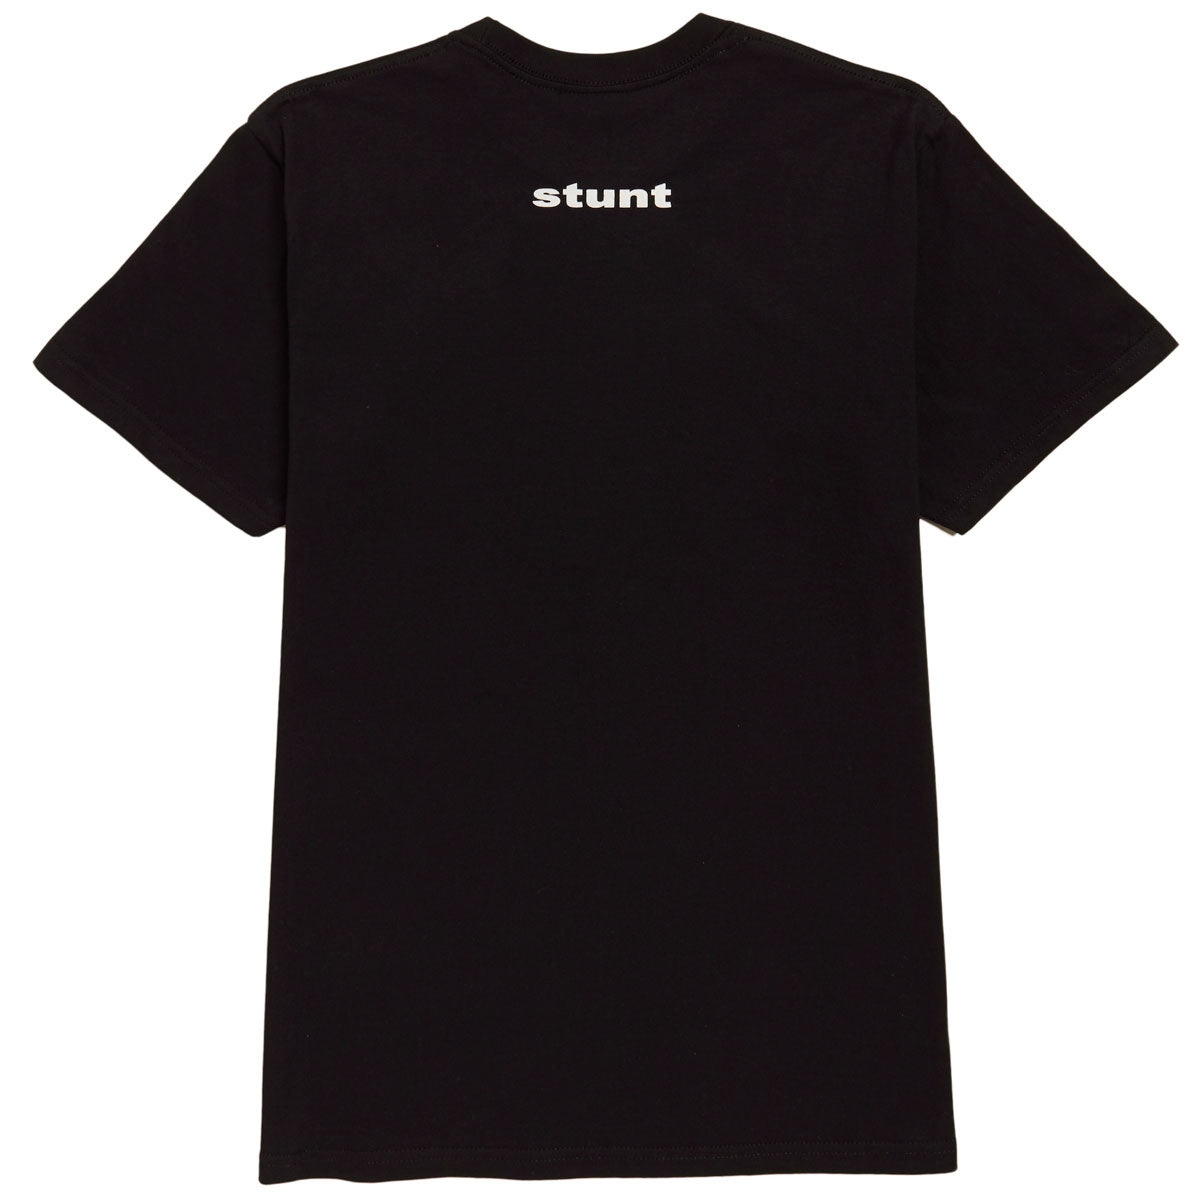 Stunt Large Ghostface T-Shirt - Black image 2